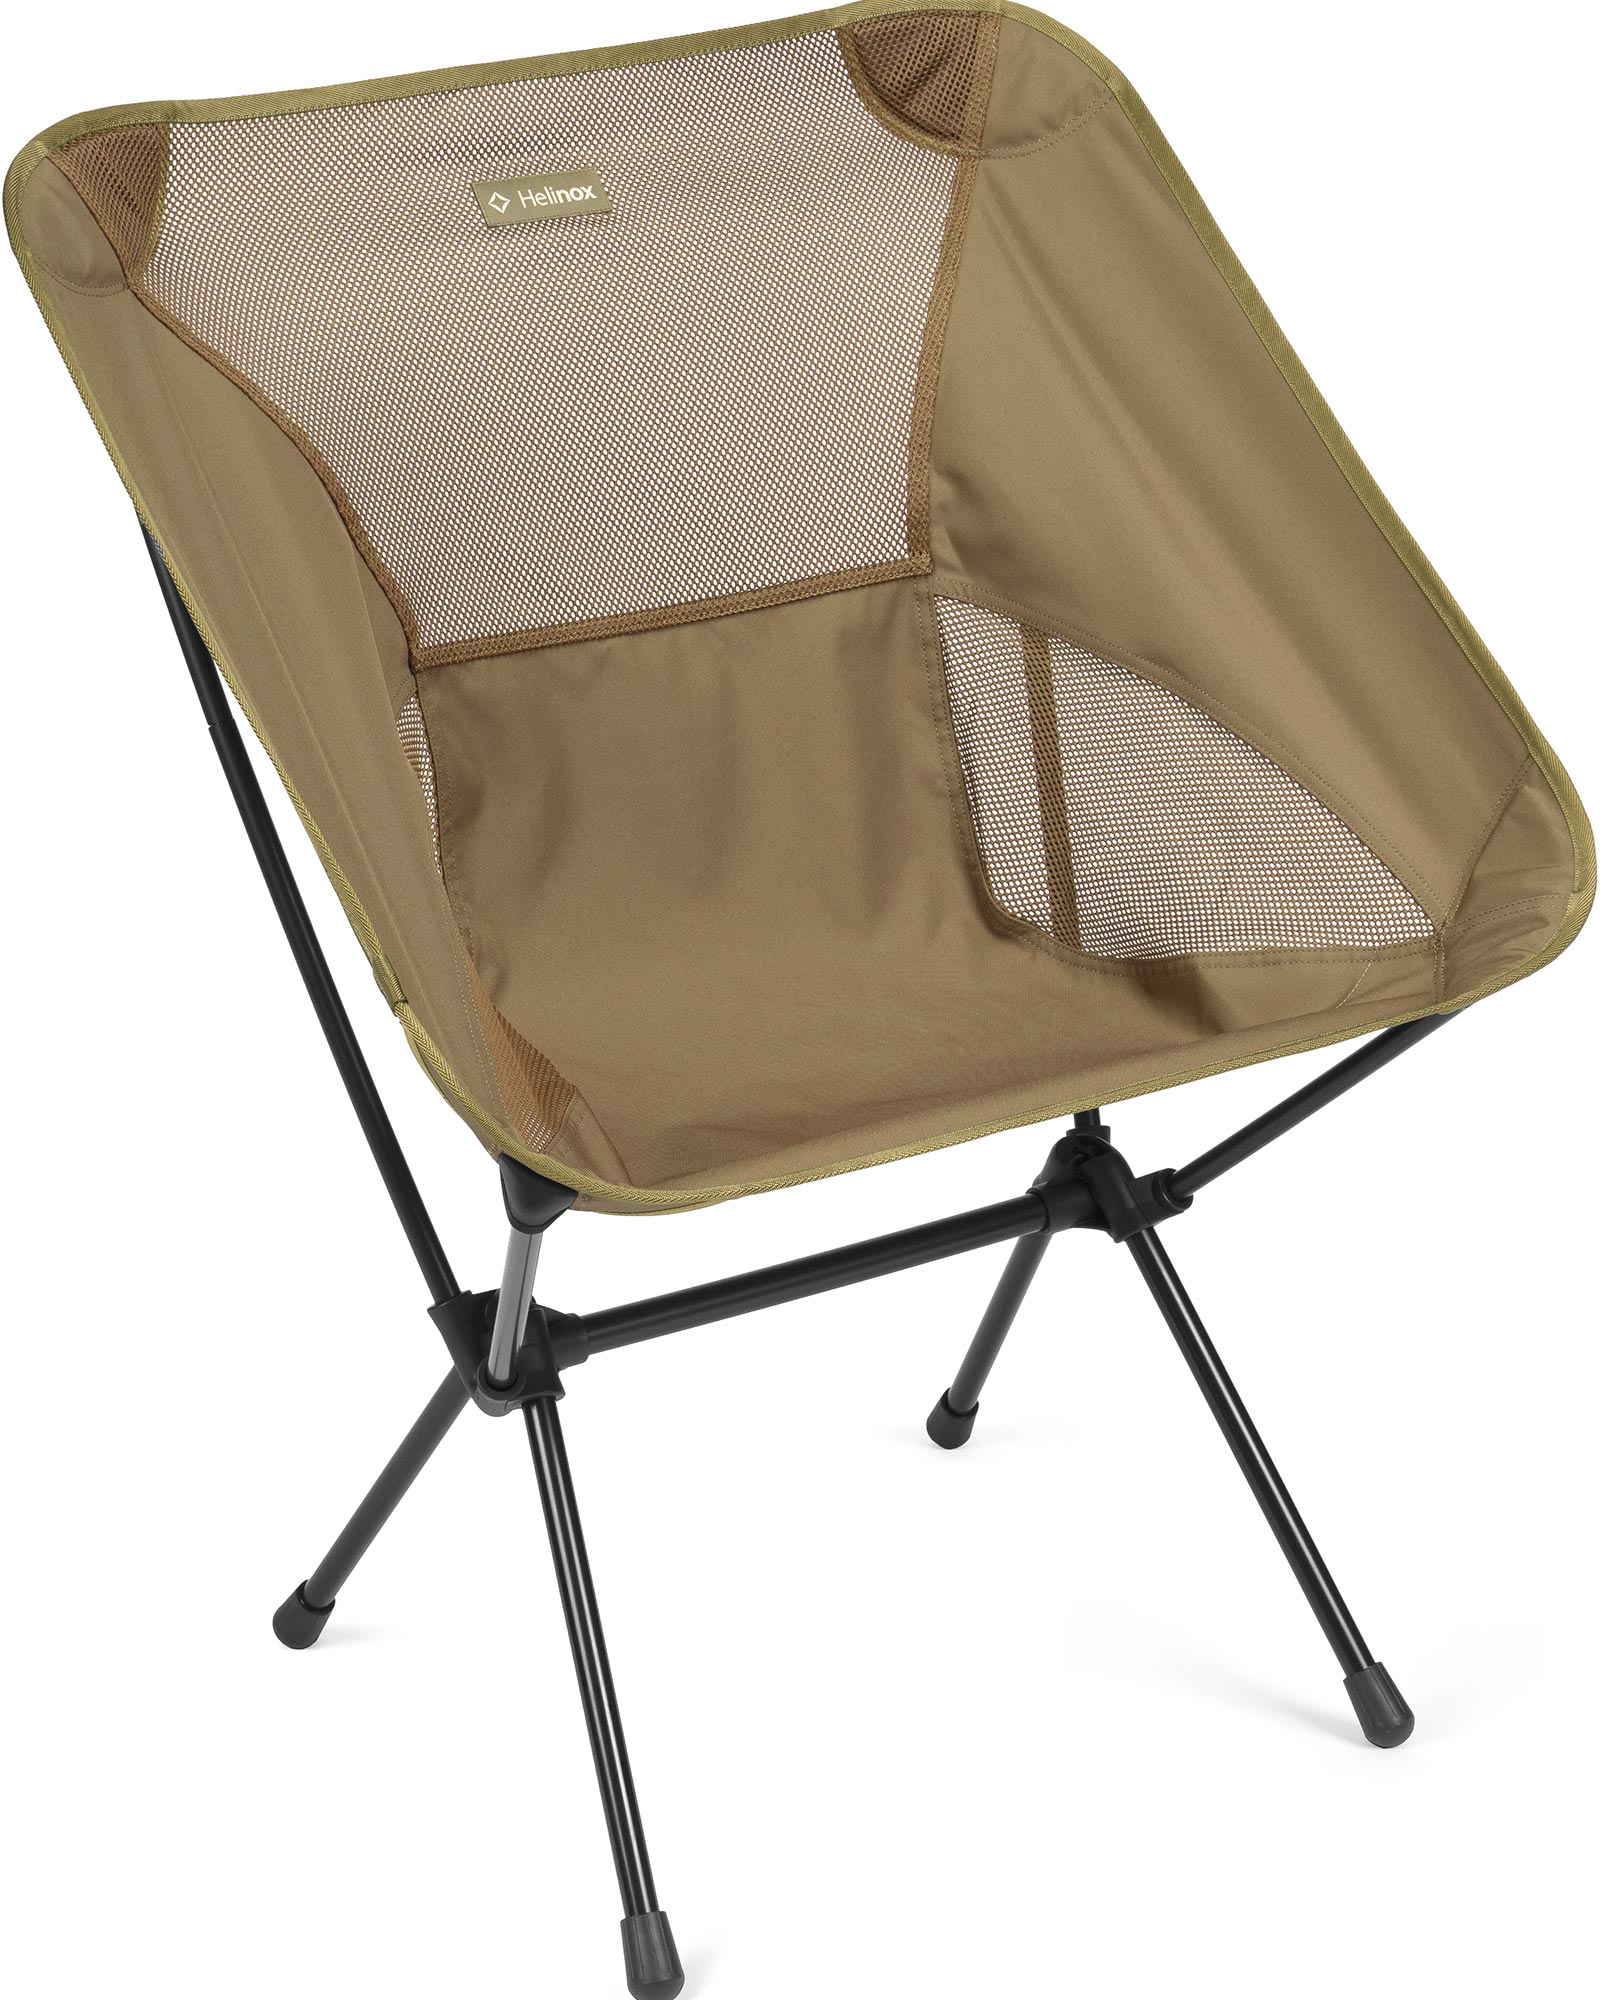 Helinox Chair One XL - Tan/Copper